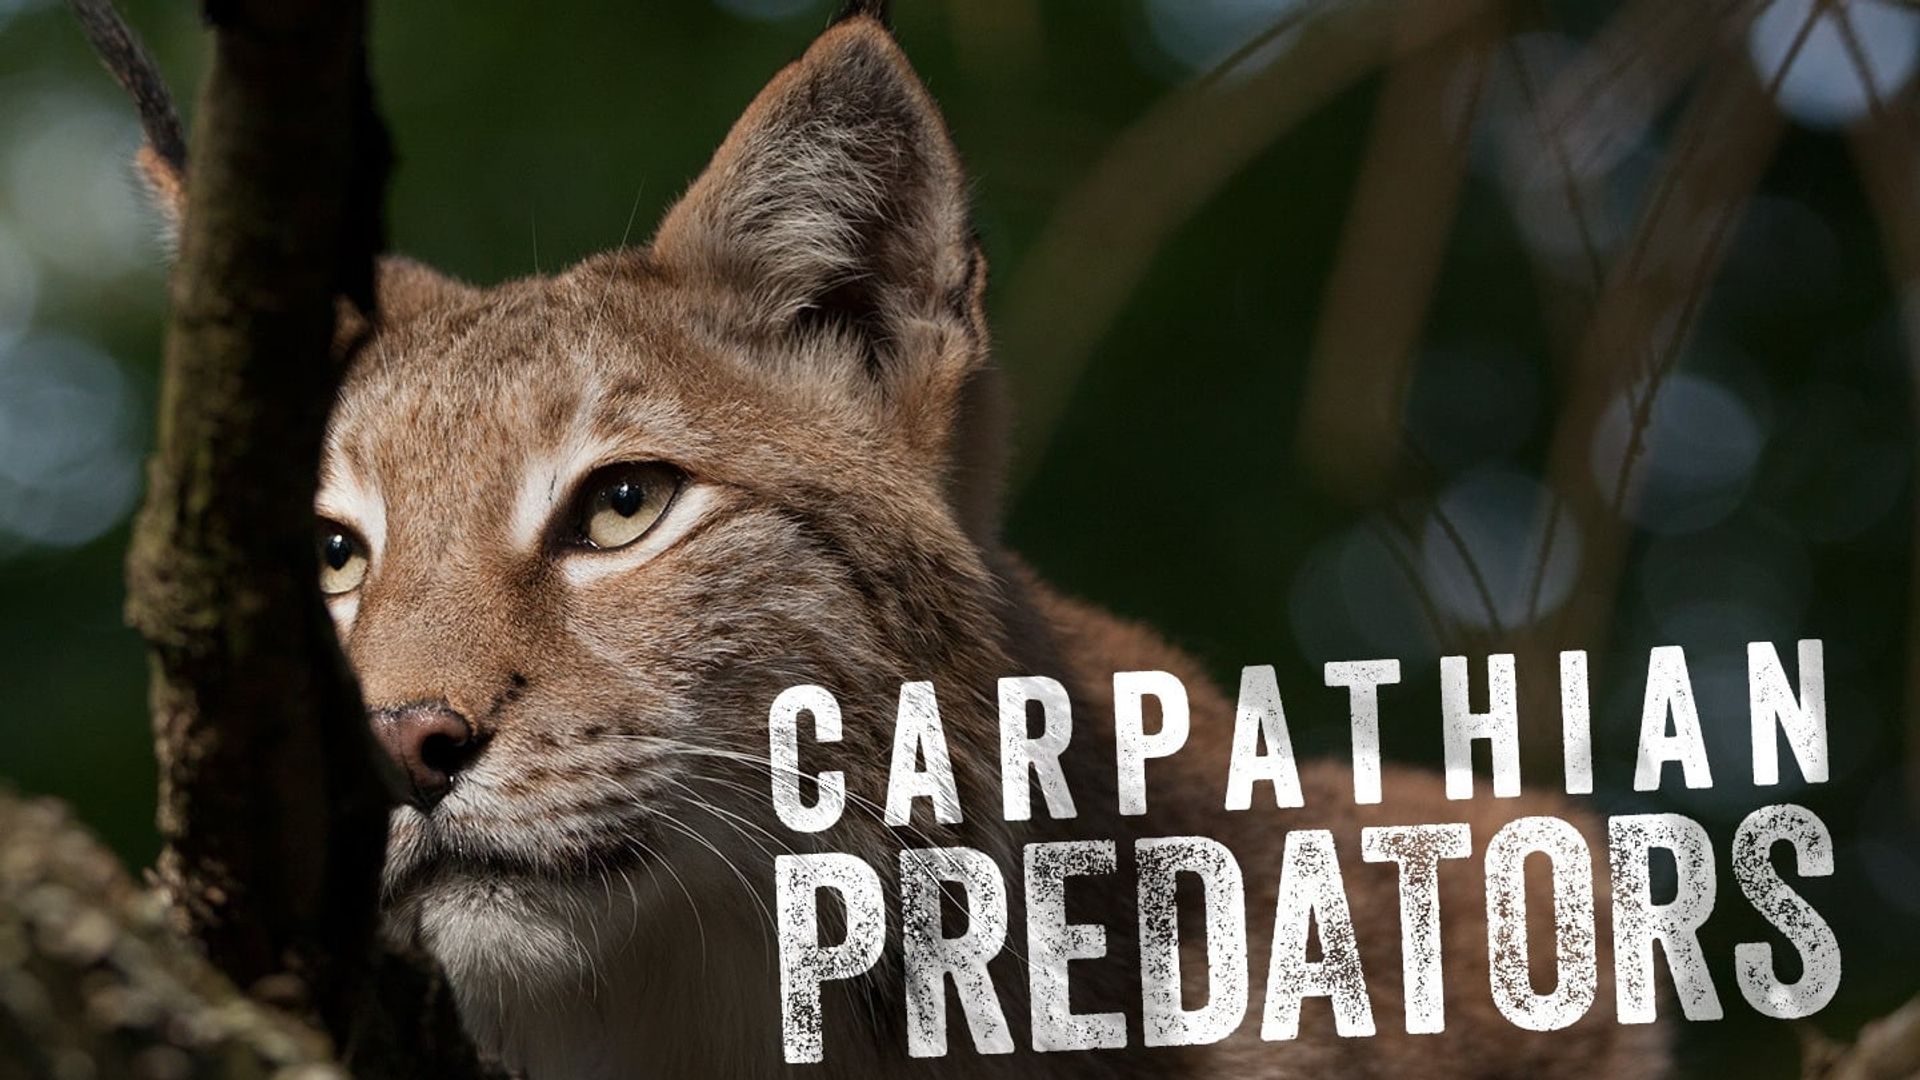 Carpathian Predators background